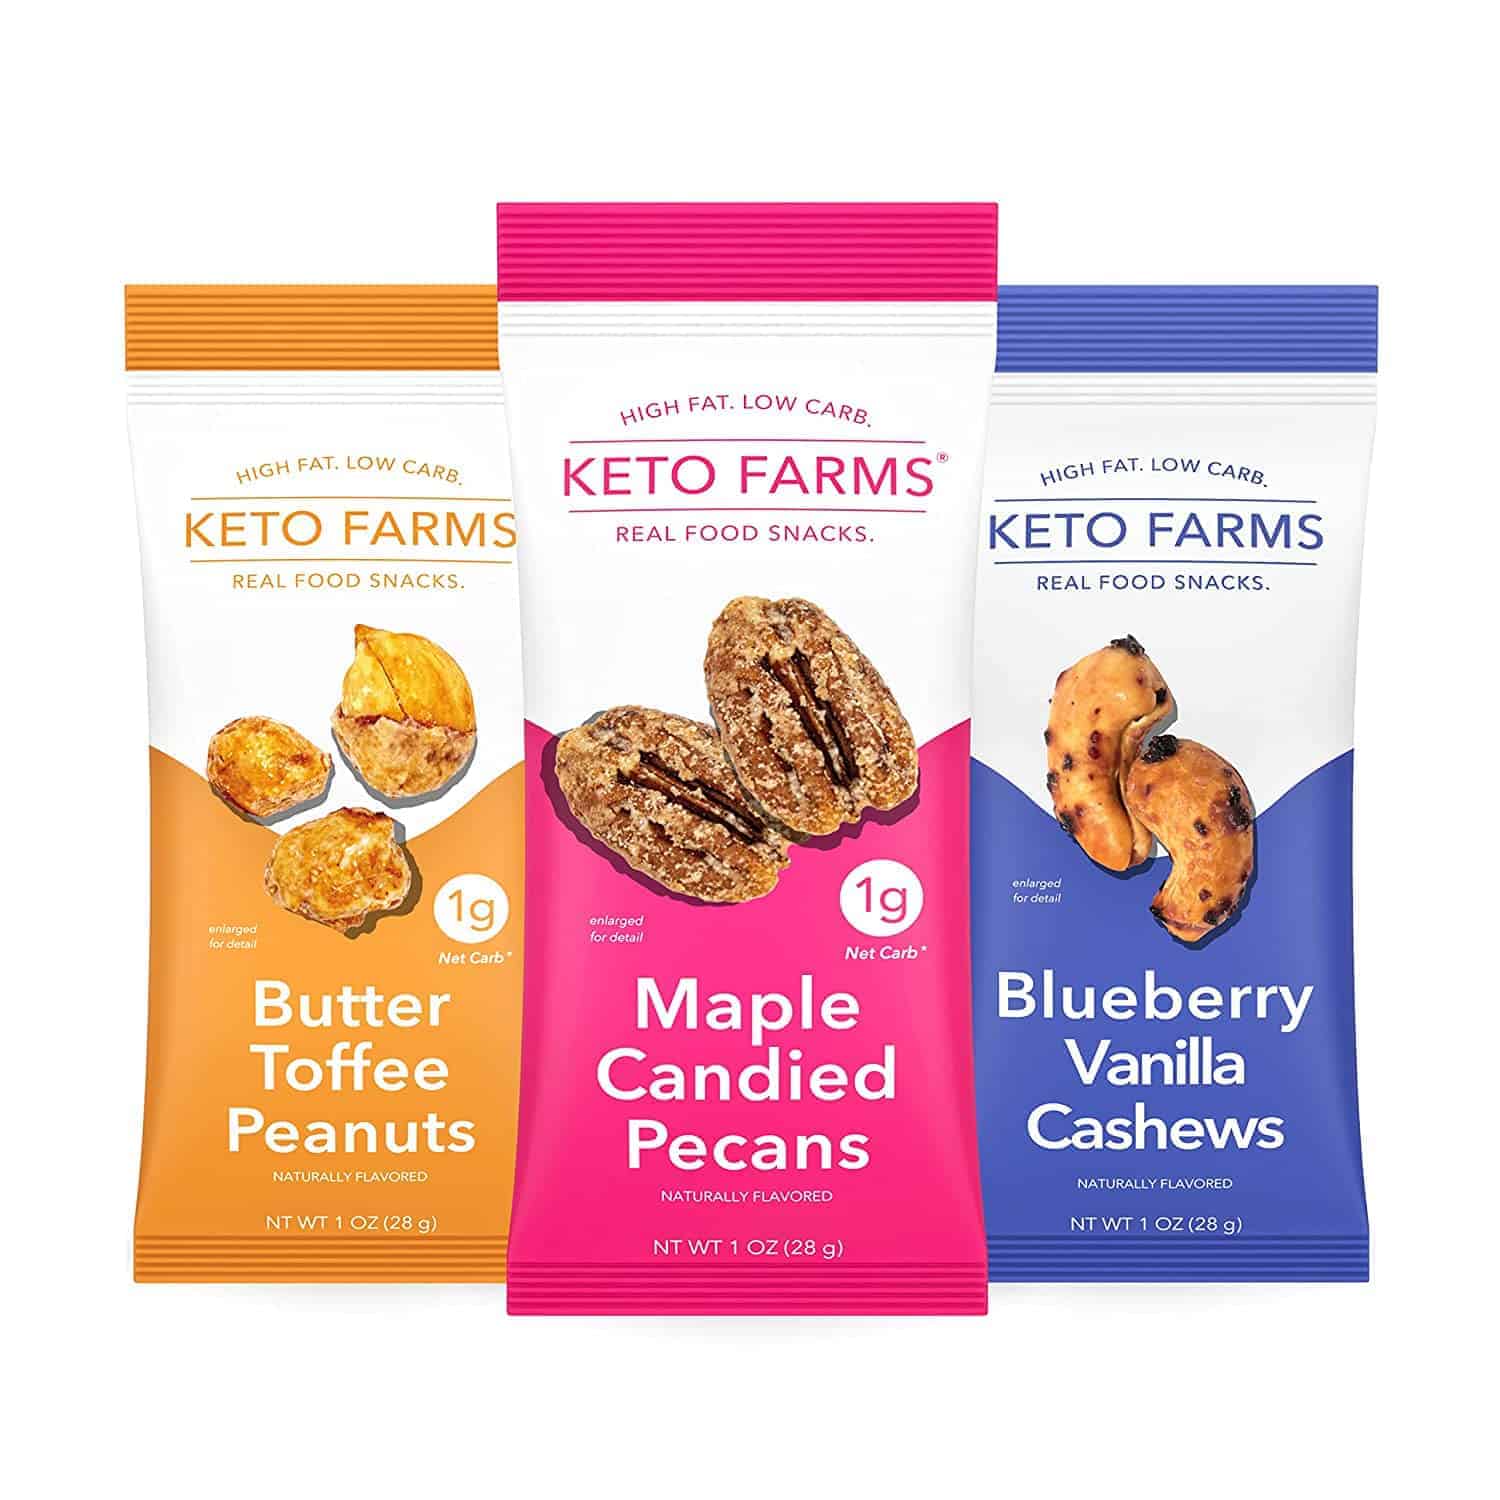 keto farms snack bags.